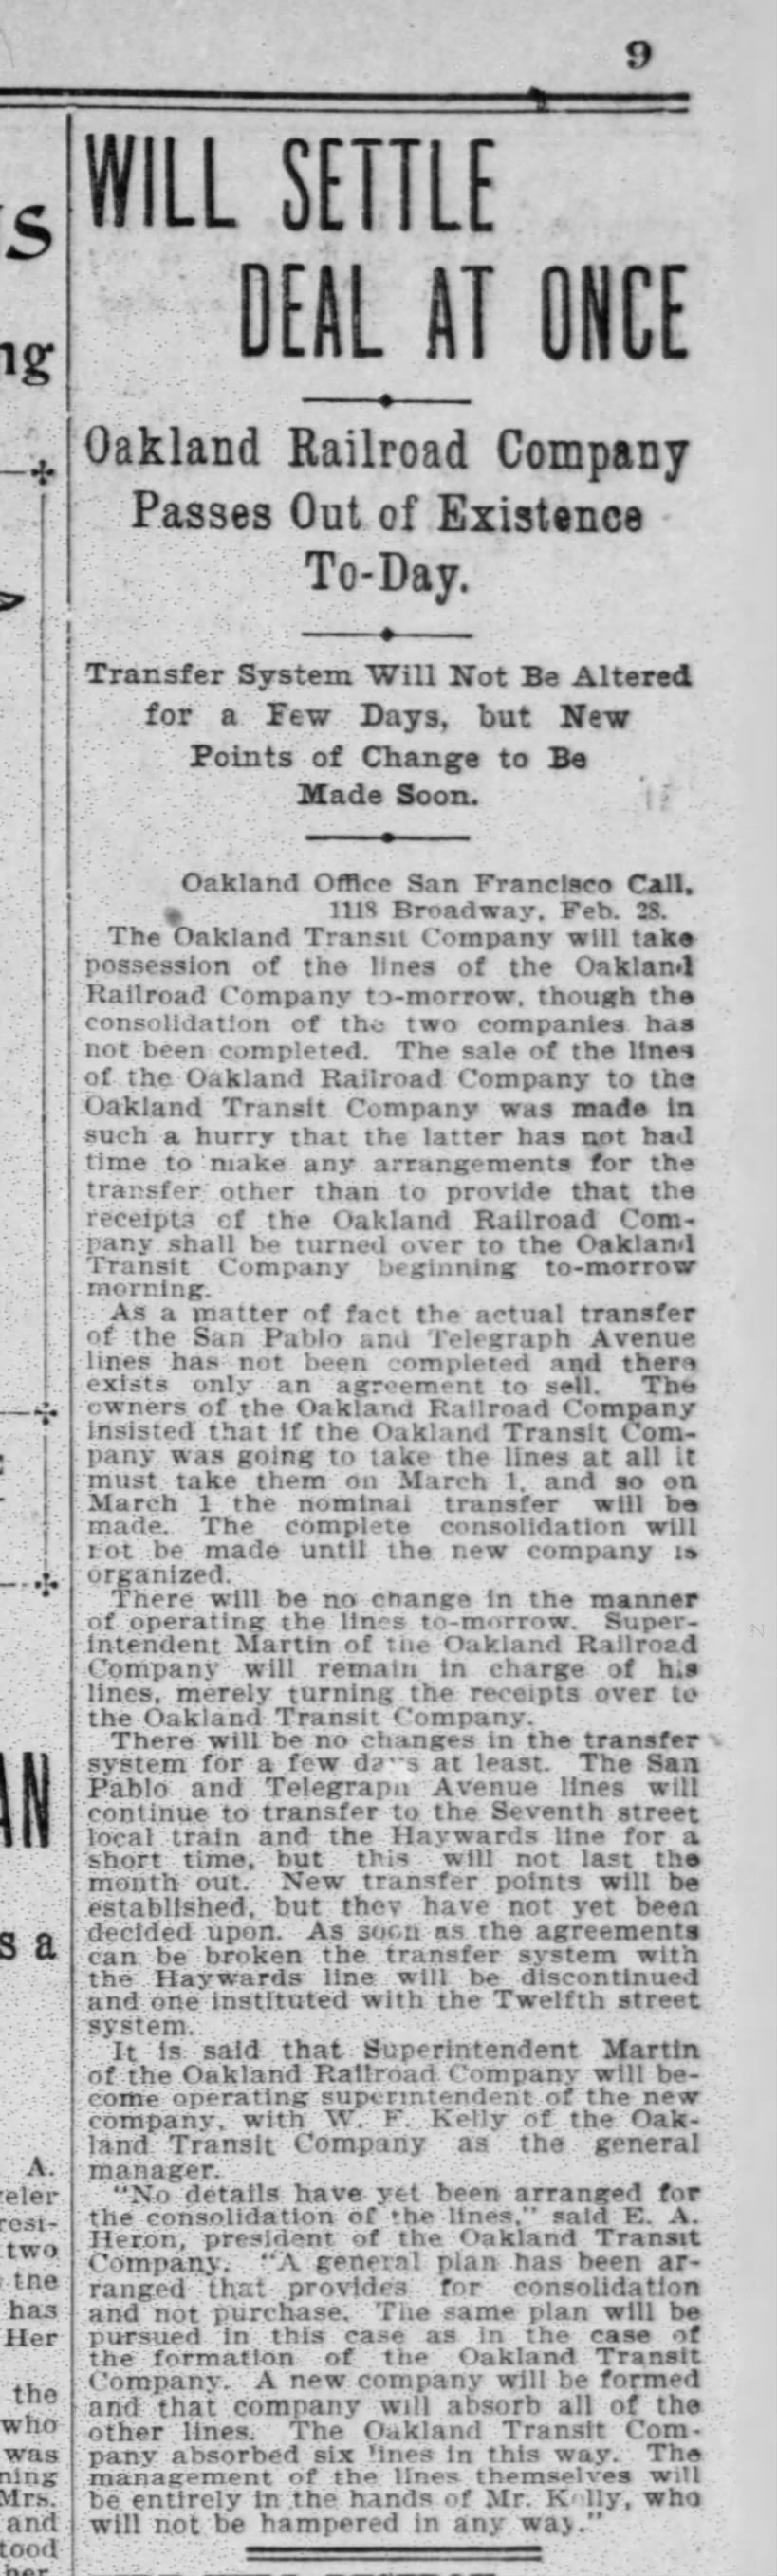 End of Oakland Railroad Company March 1, 1901